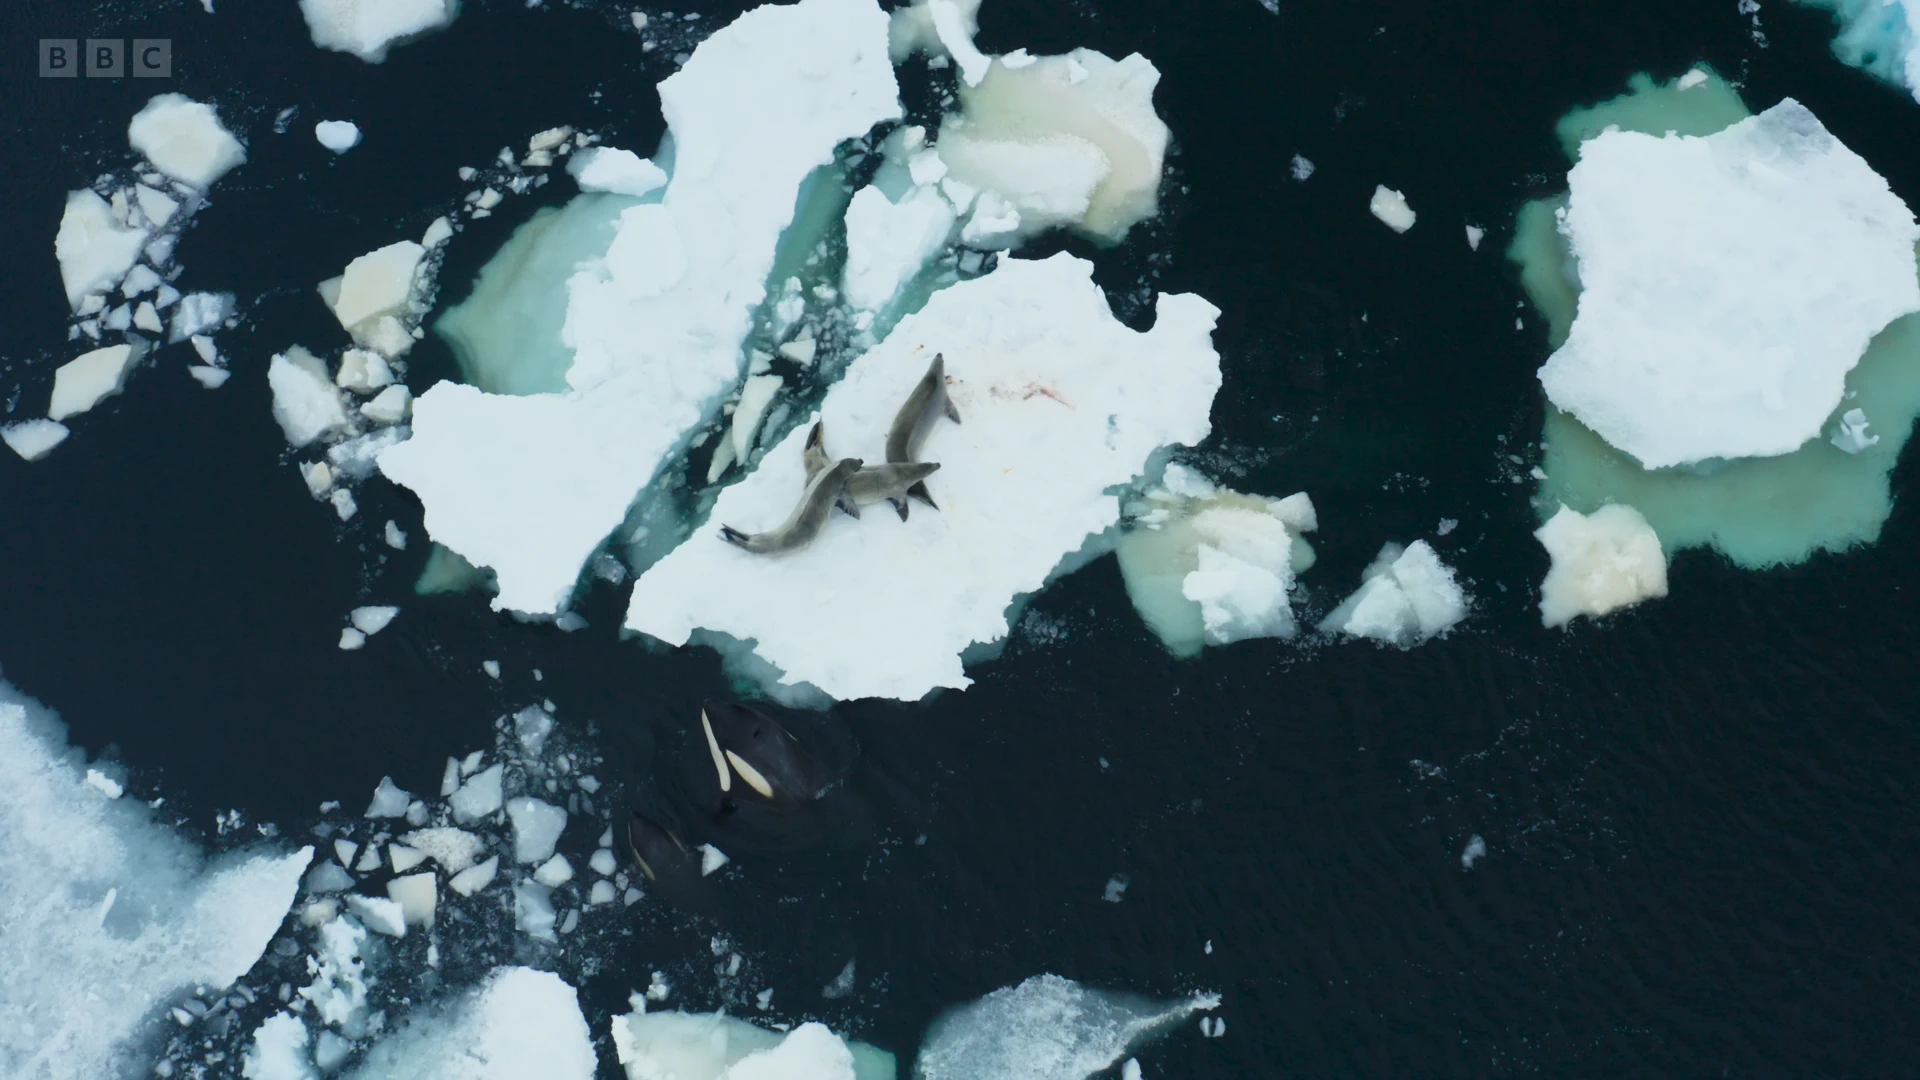 Crabeater seal (Lobodon carcinophaga) as shown in Frozen Planet II - Frozen South